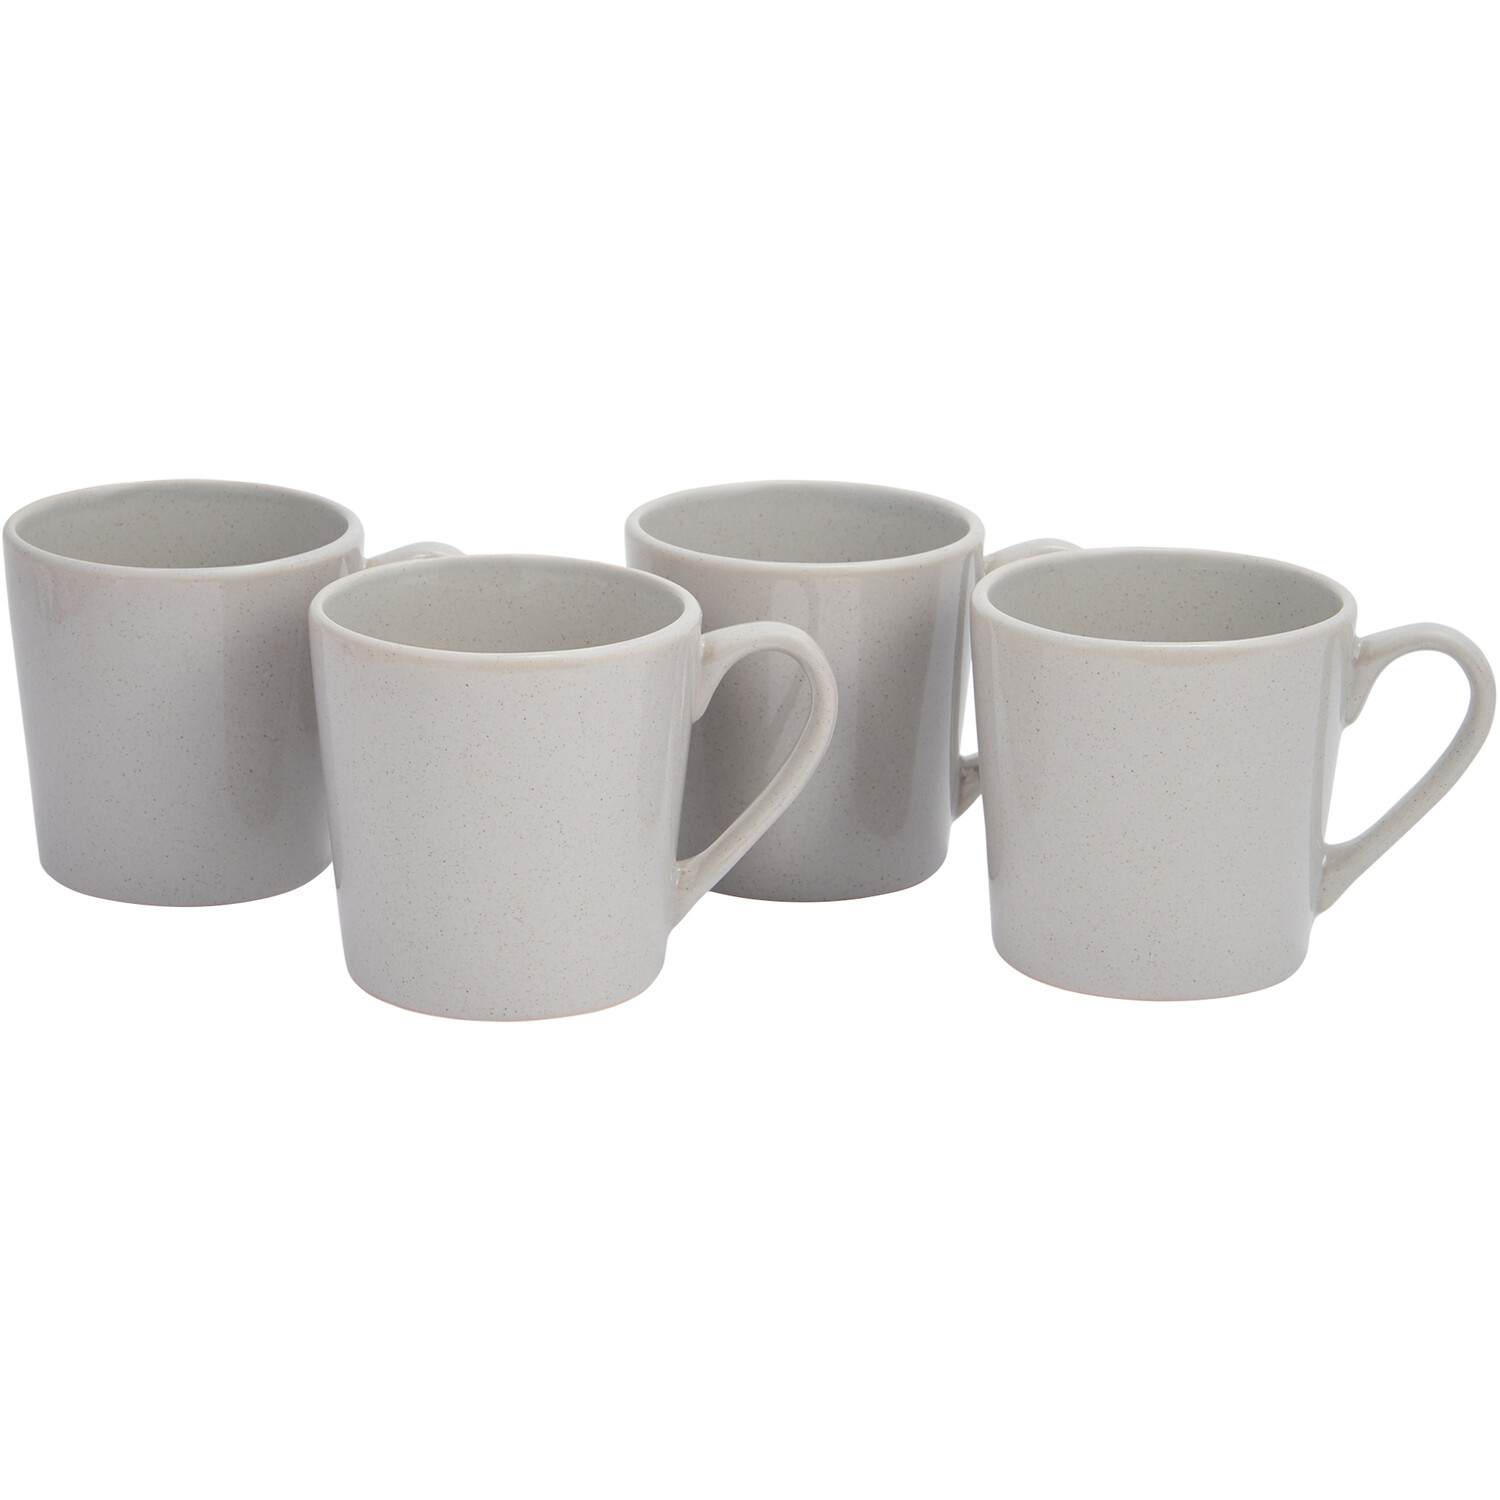 Set of 4 Alta Mugs - Grey Image 1